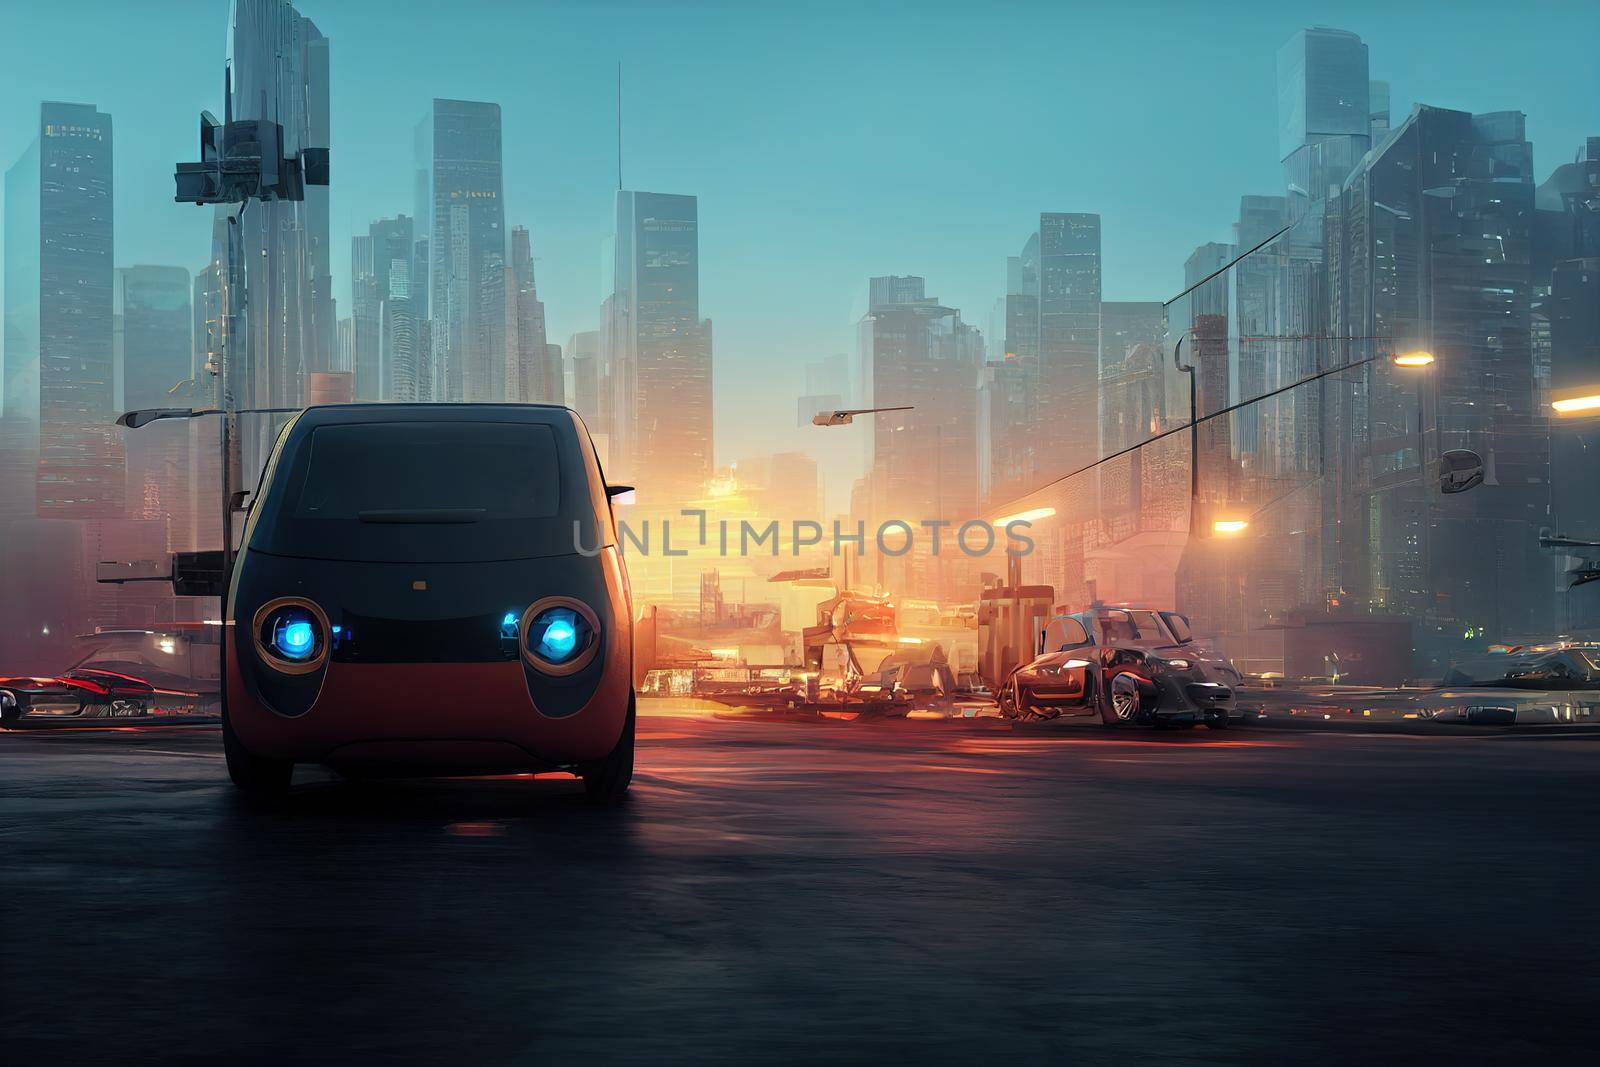 Intelligent Vehicles Cars Communicating Ai Logistic Autonomous Delivery - futuristic concept car in future city